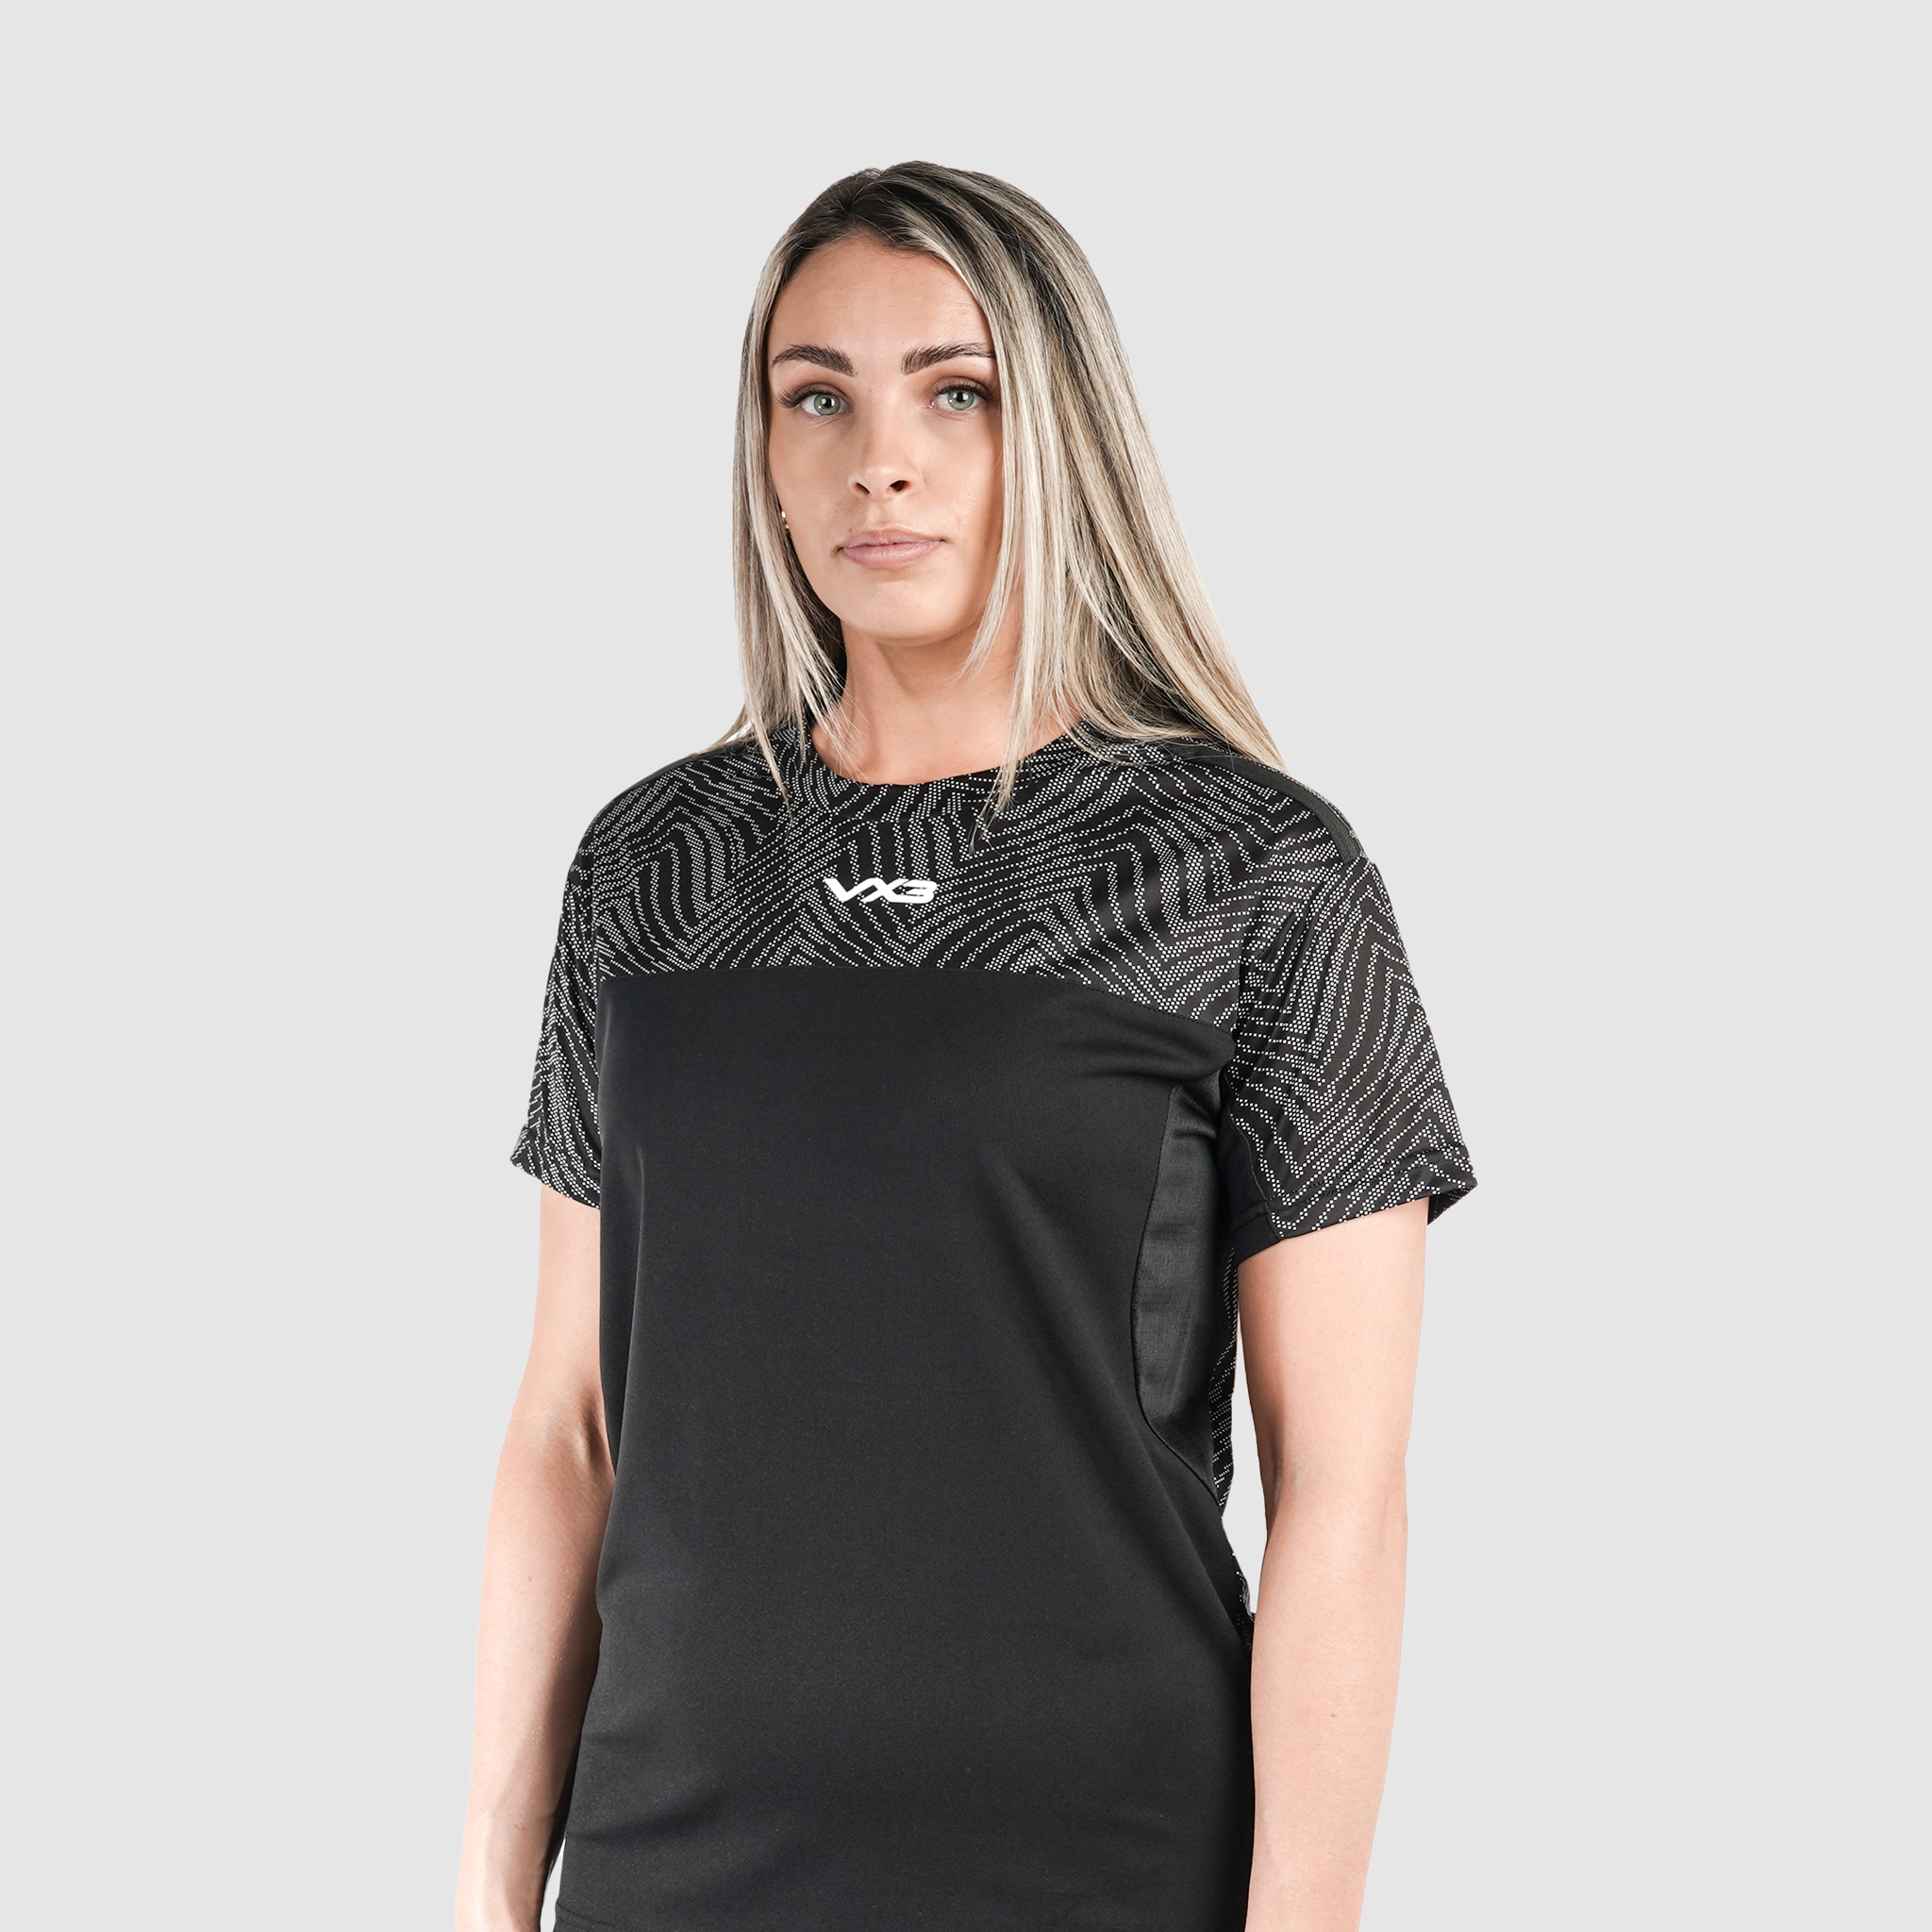 Tundra Women's T-Shirt Black